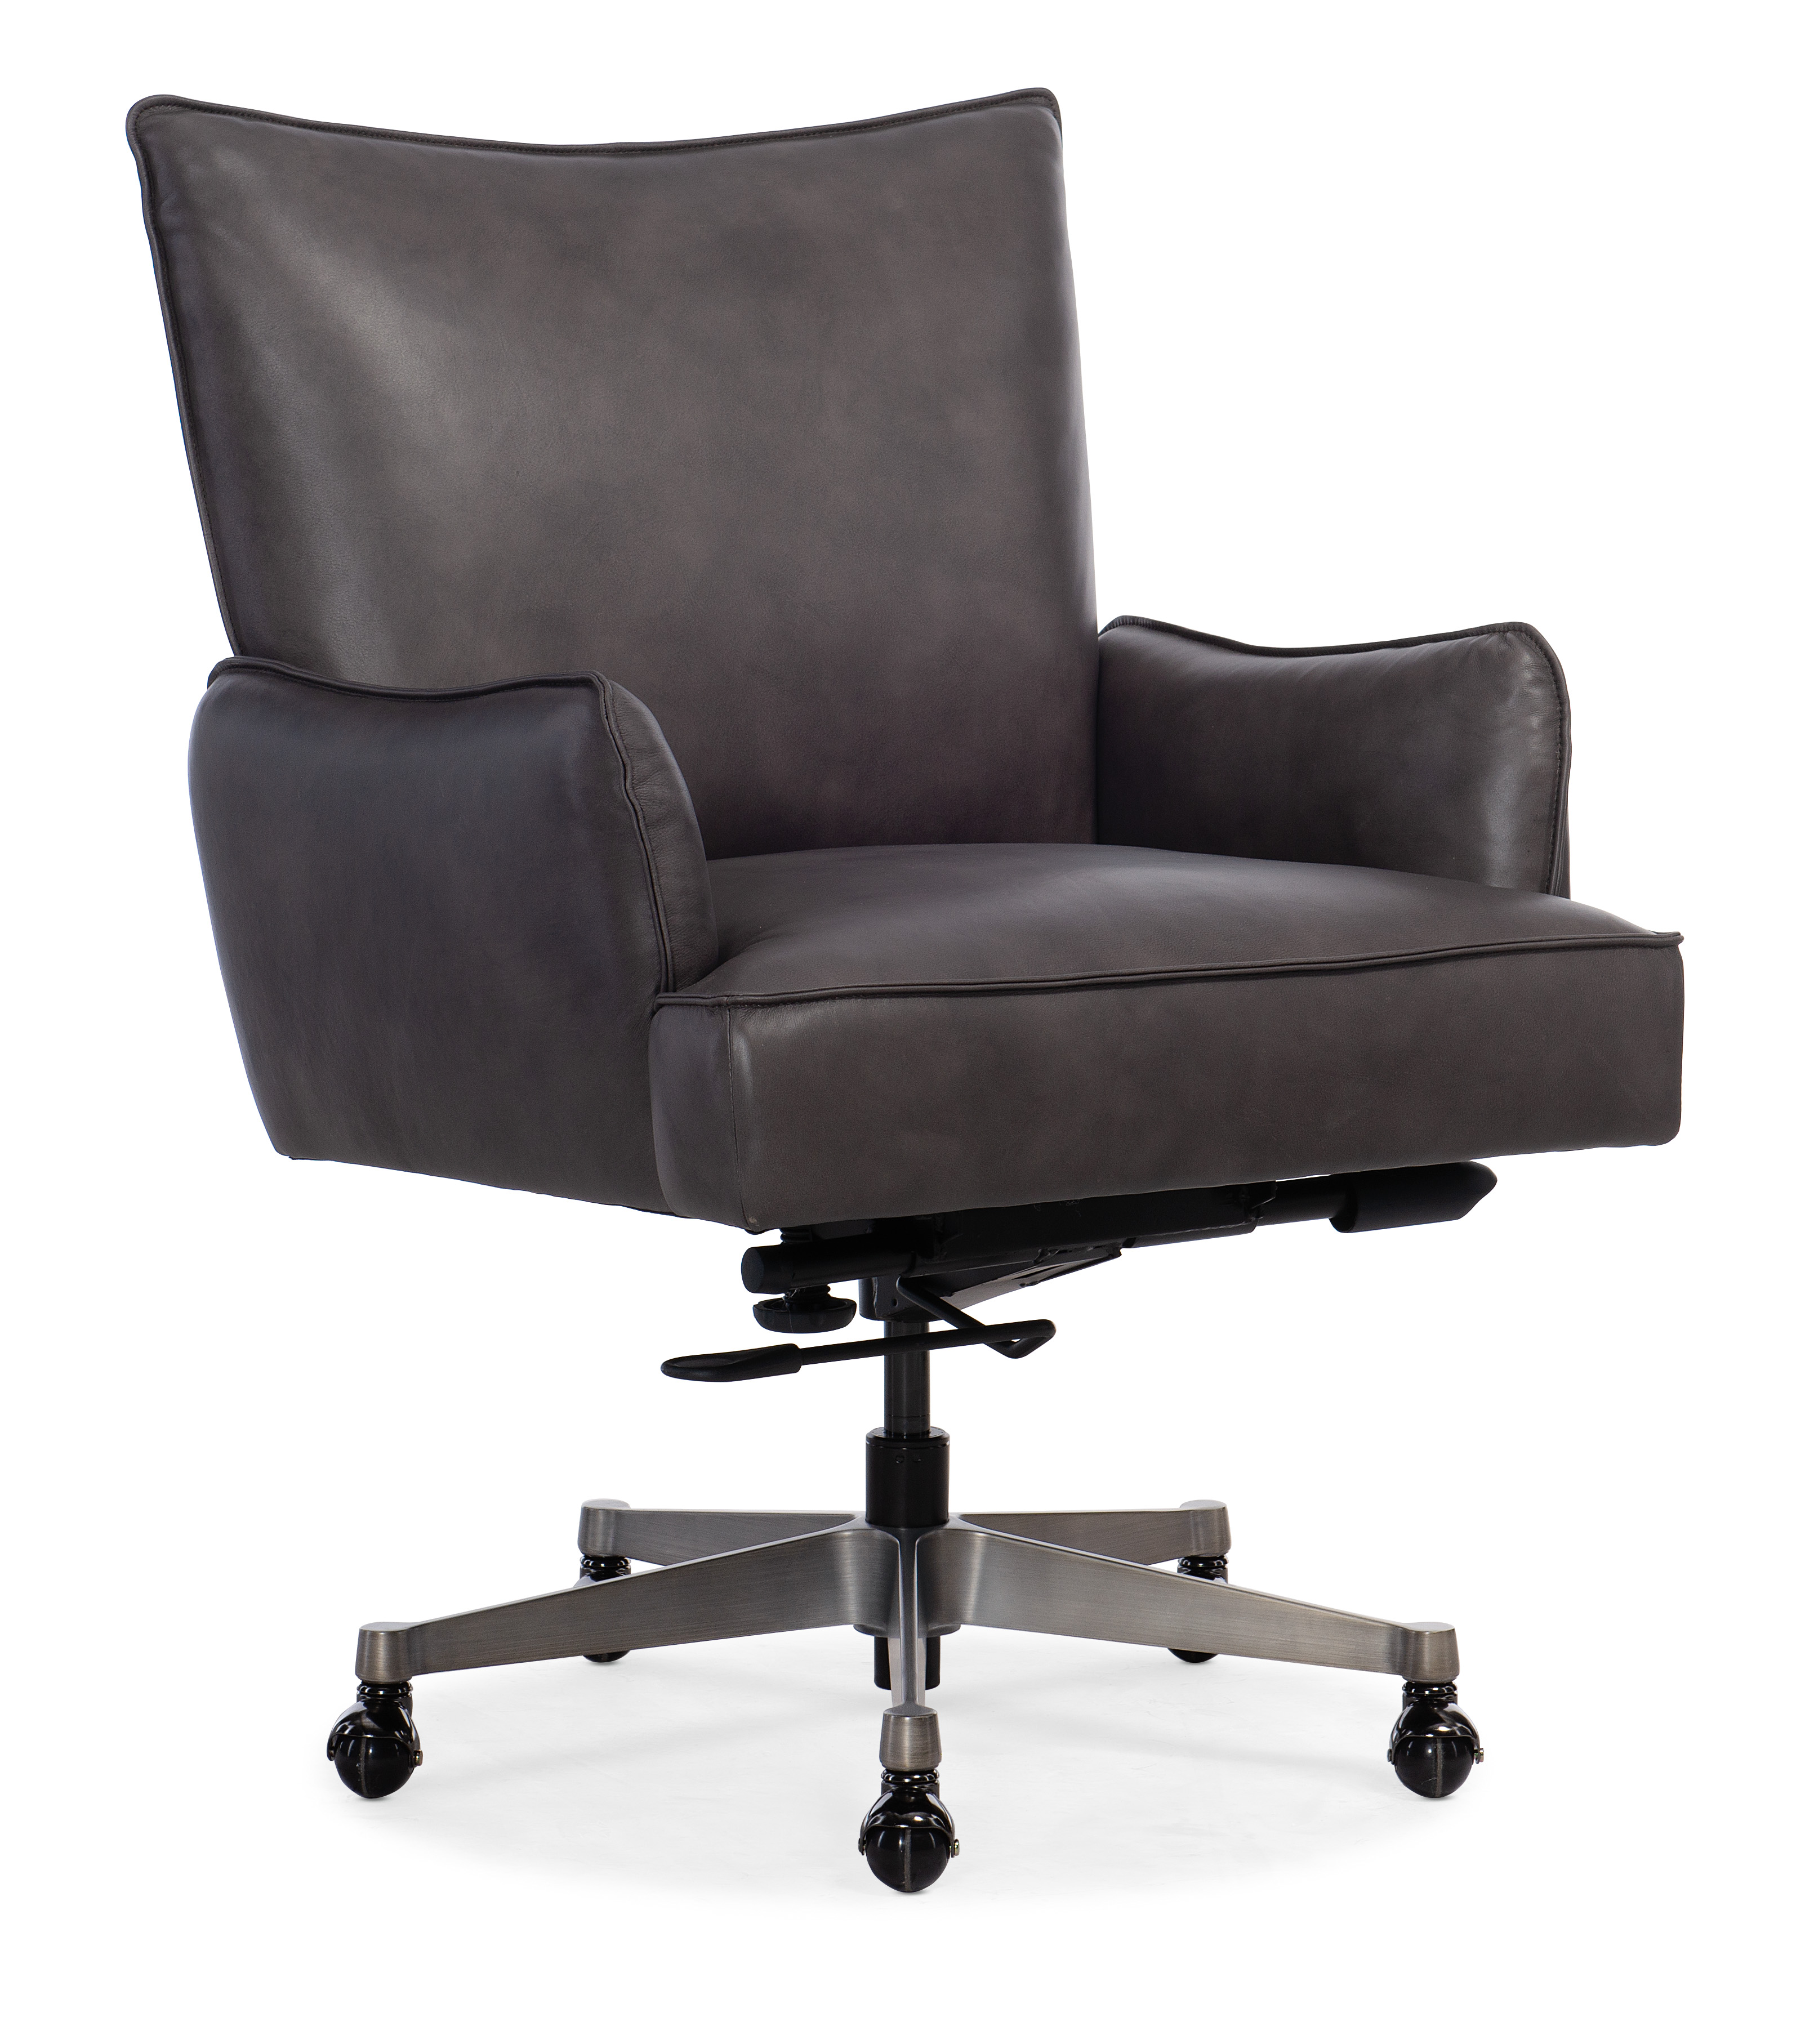 Picture of Quinn Executive Swivel Tilt Chair